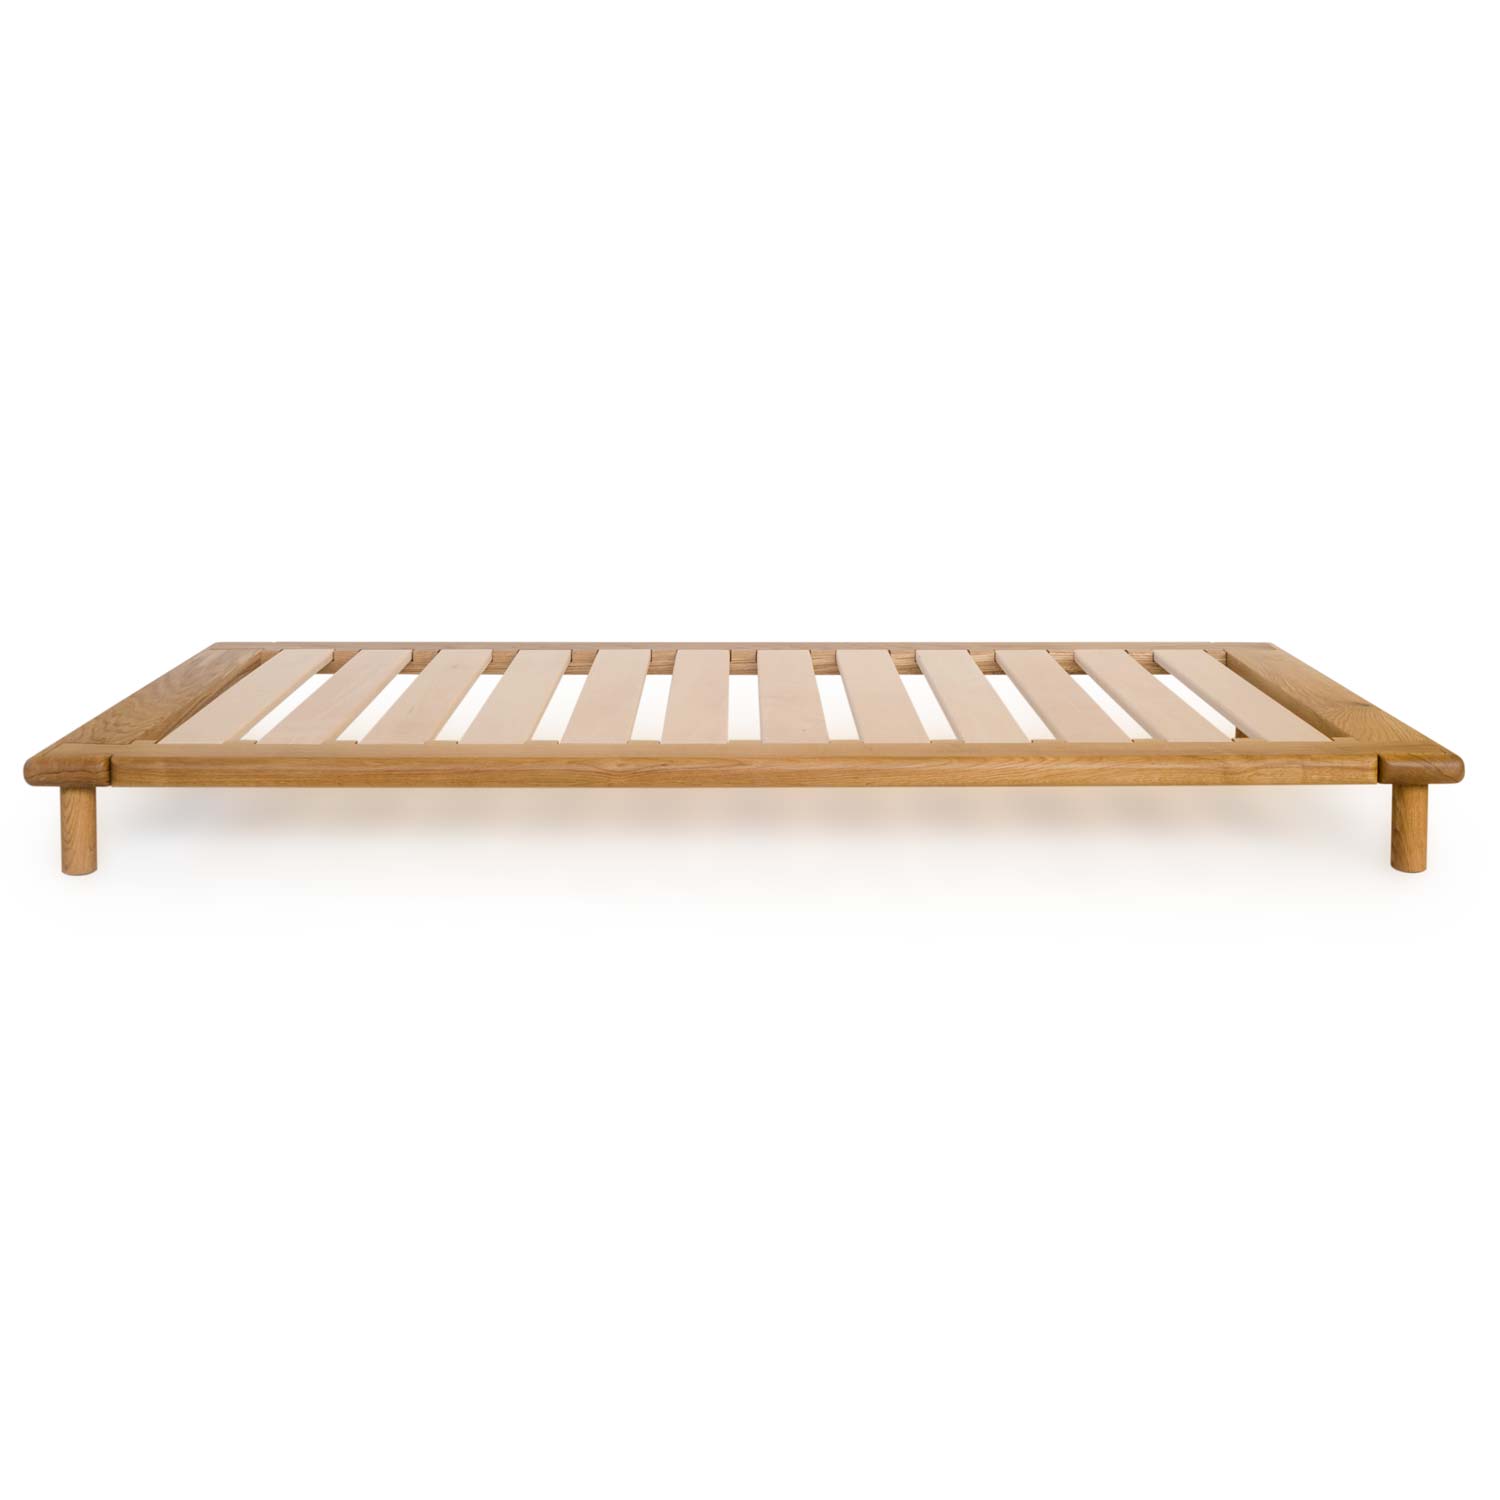 Oak Platform Bed Without A Headboard, Modern Oak Bed Frame